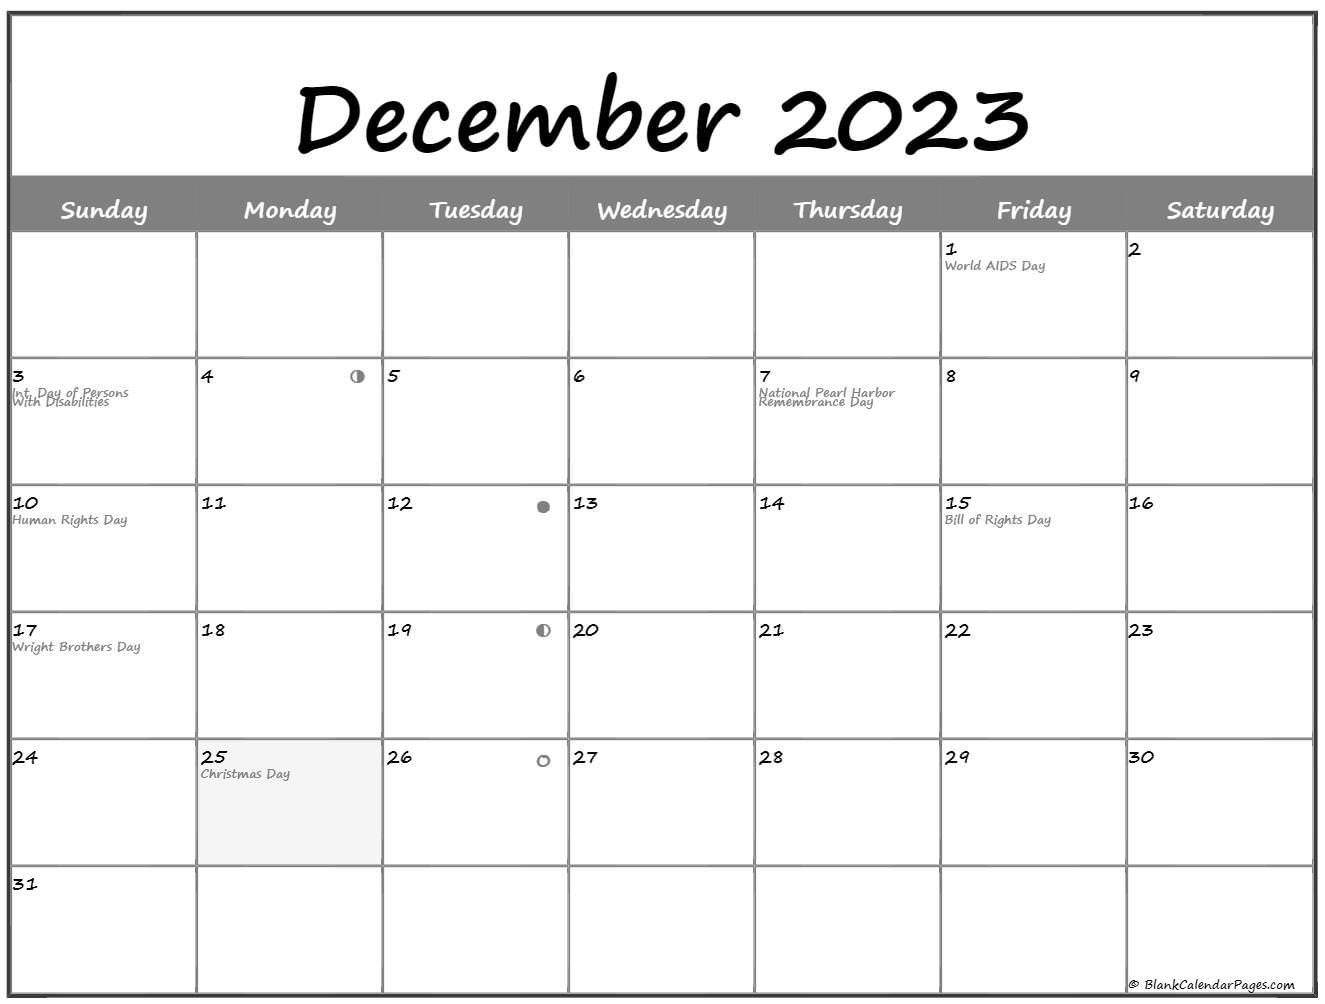 December 2023 Lunar Calendar Moon Phase Calendar